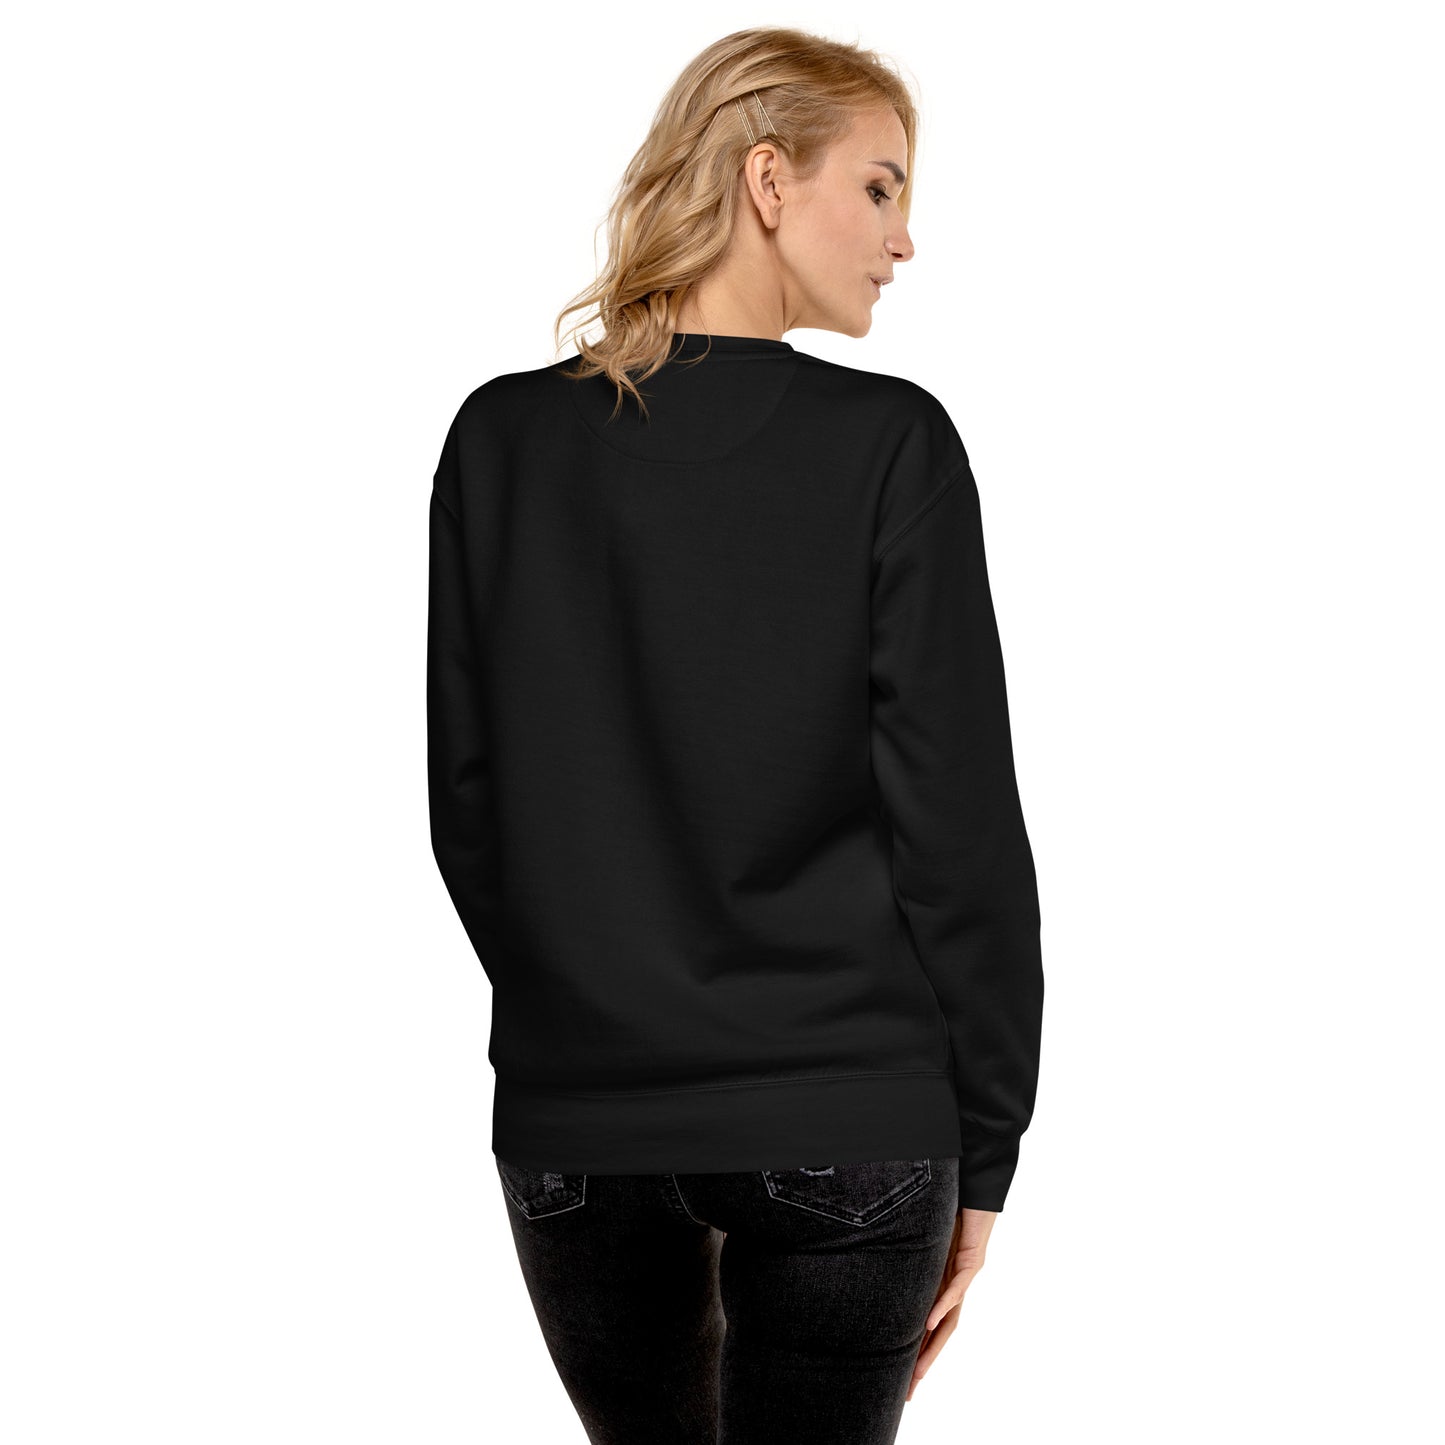 Big Smile Fleece in Black - Sweatshirt